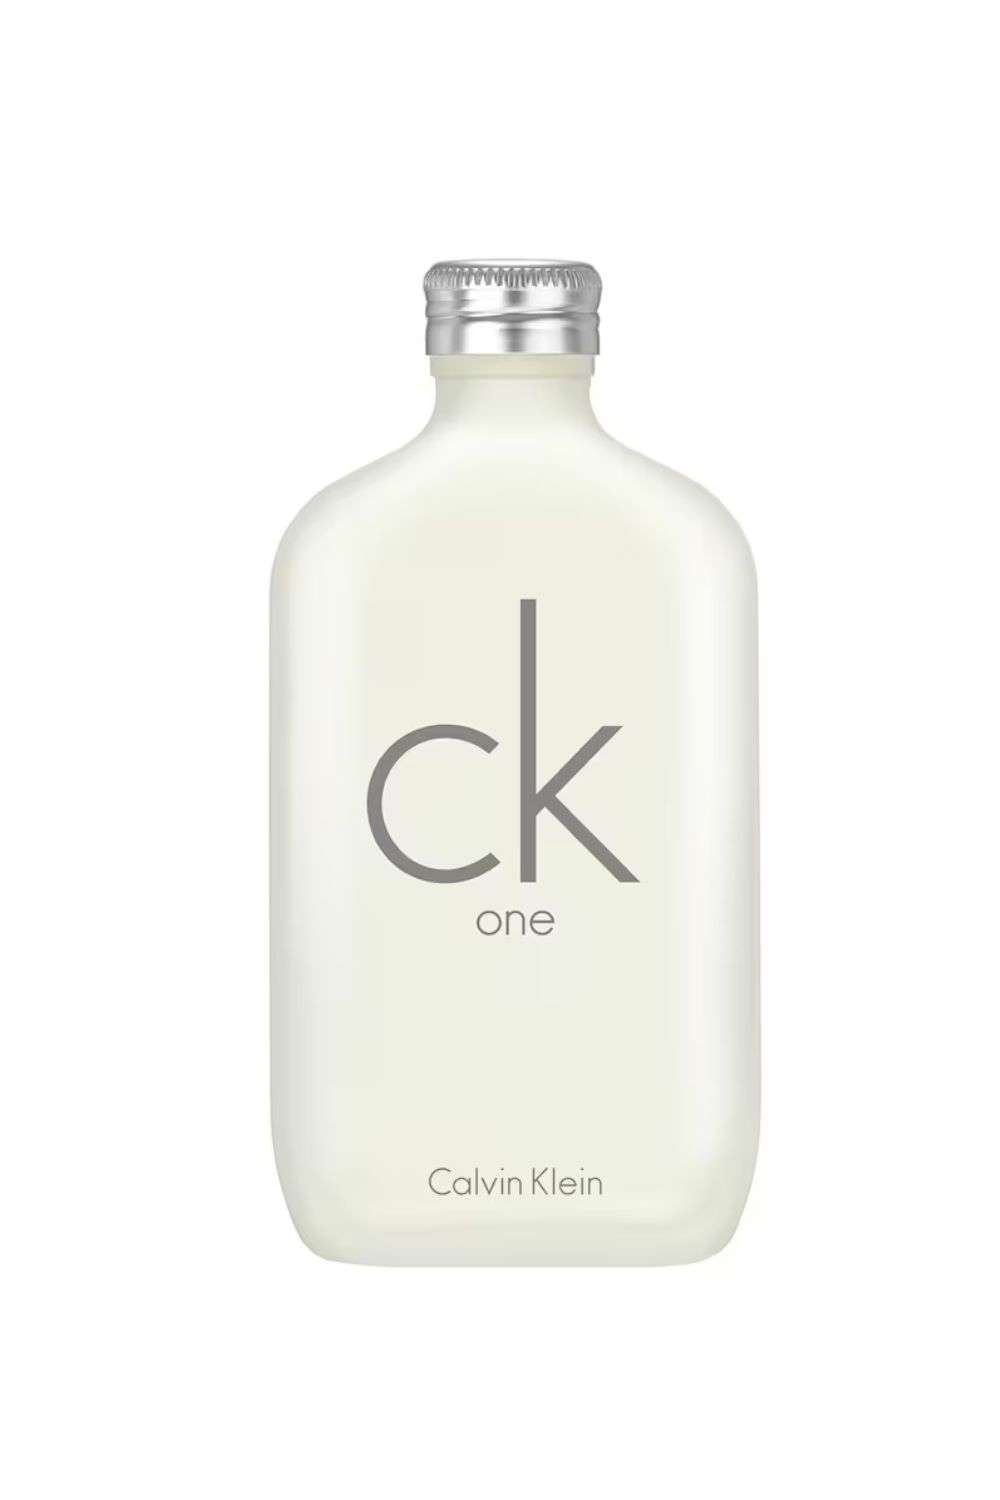 Eau de Toilette cK one de Calvin Klein